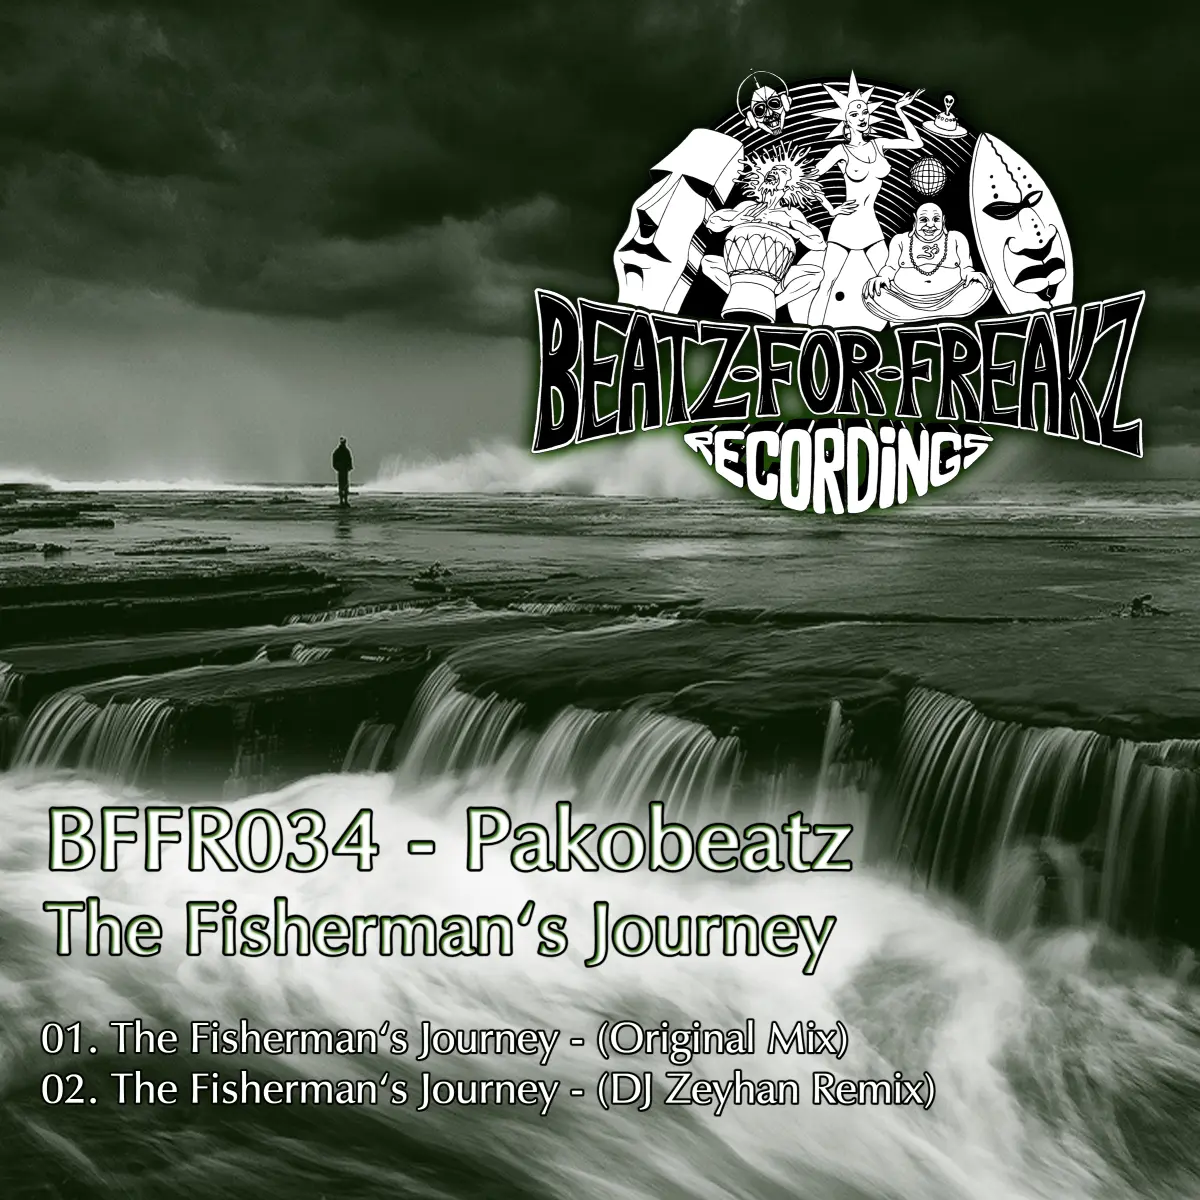 BFFR034 - Pakobeatz - Fisherman's Journey